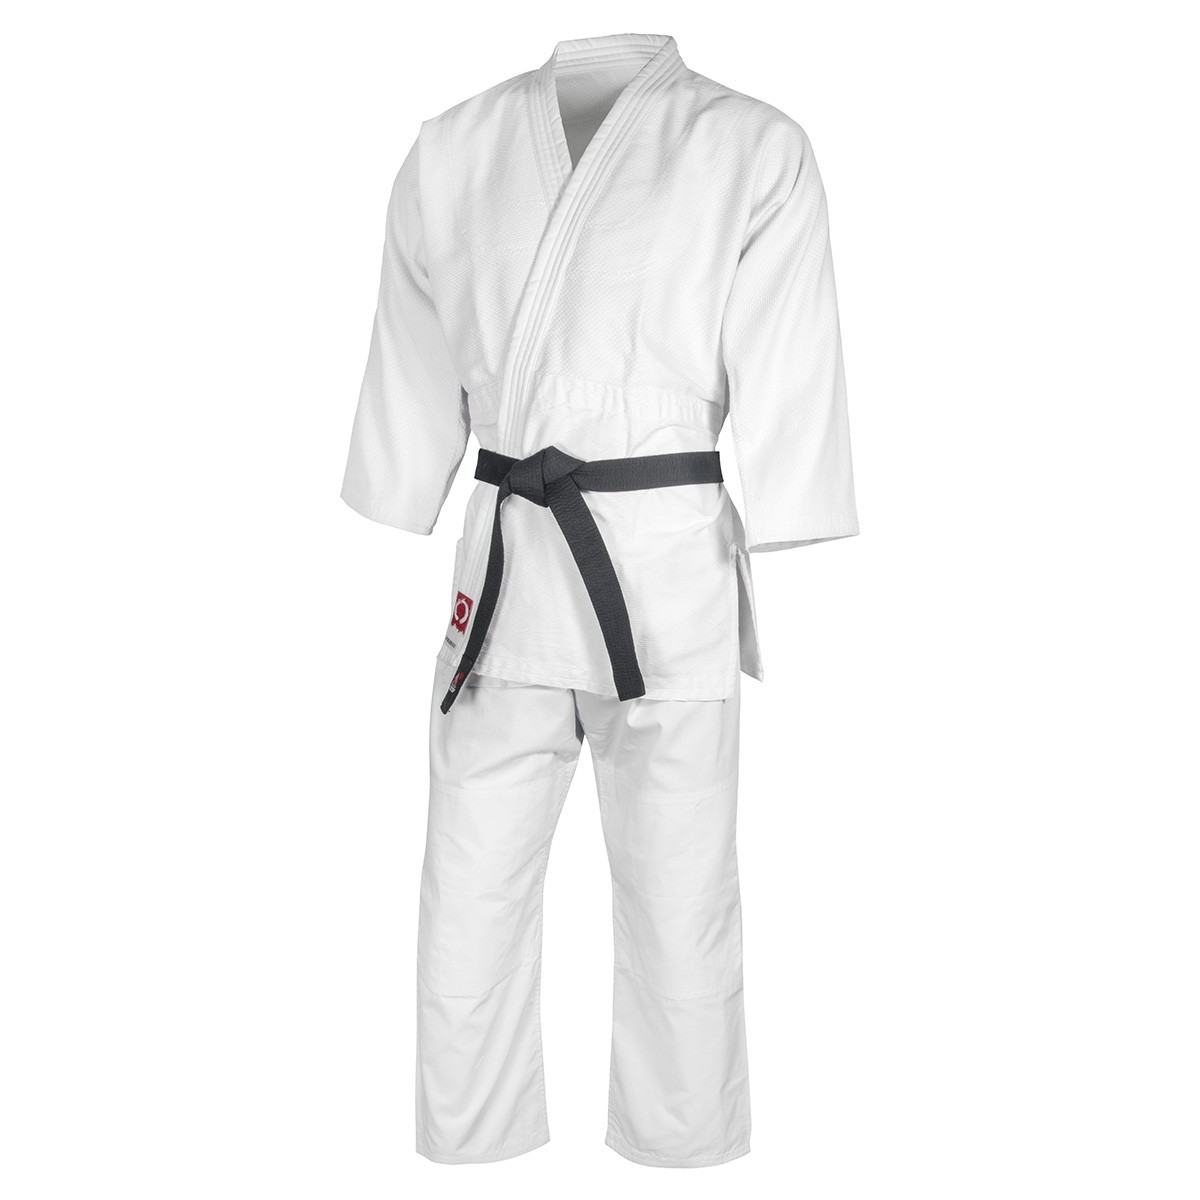 Aikido Gi weiß 450 gr/qm Kampfsportbekleidung Training Erwachsene Wettkampf 